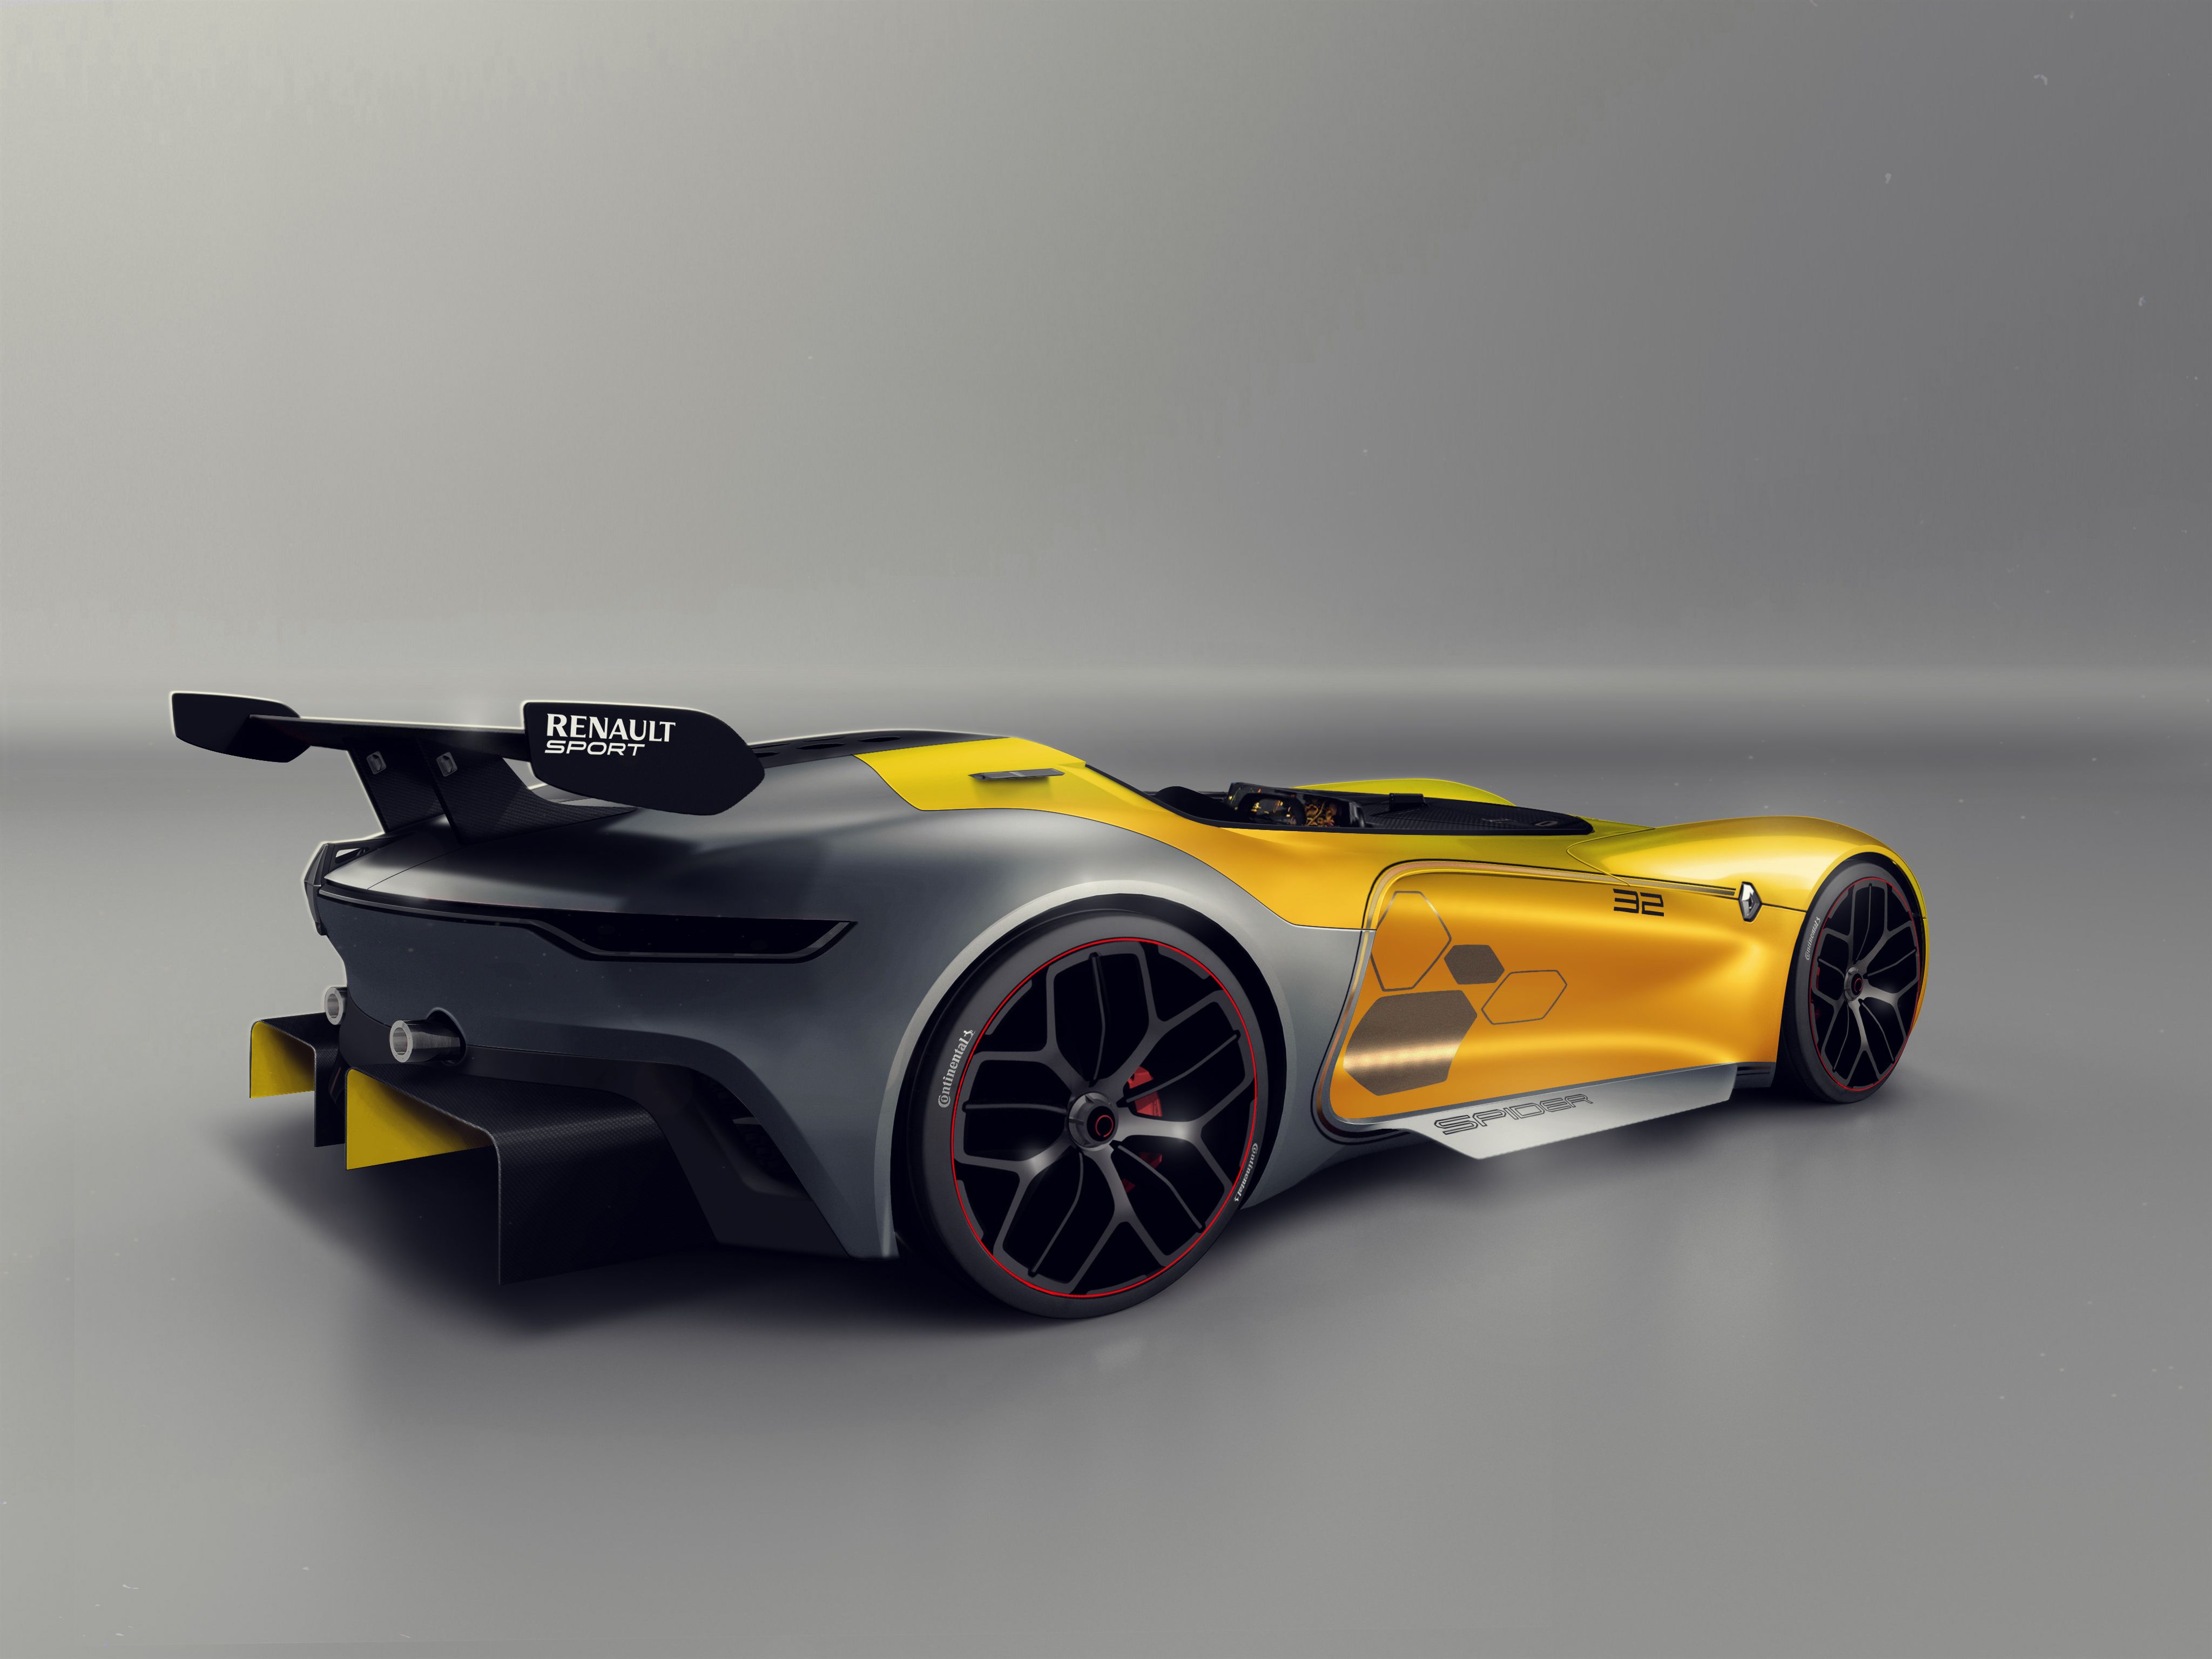 Renault yellow sports car rear view